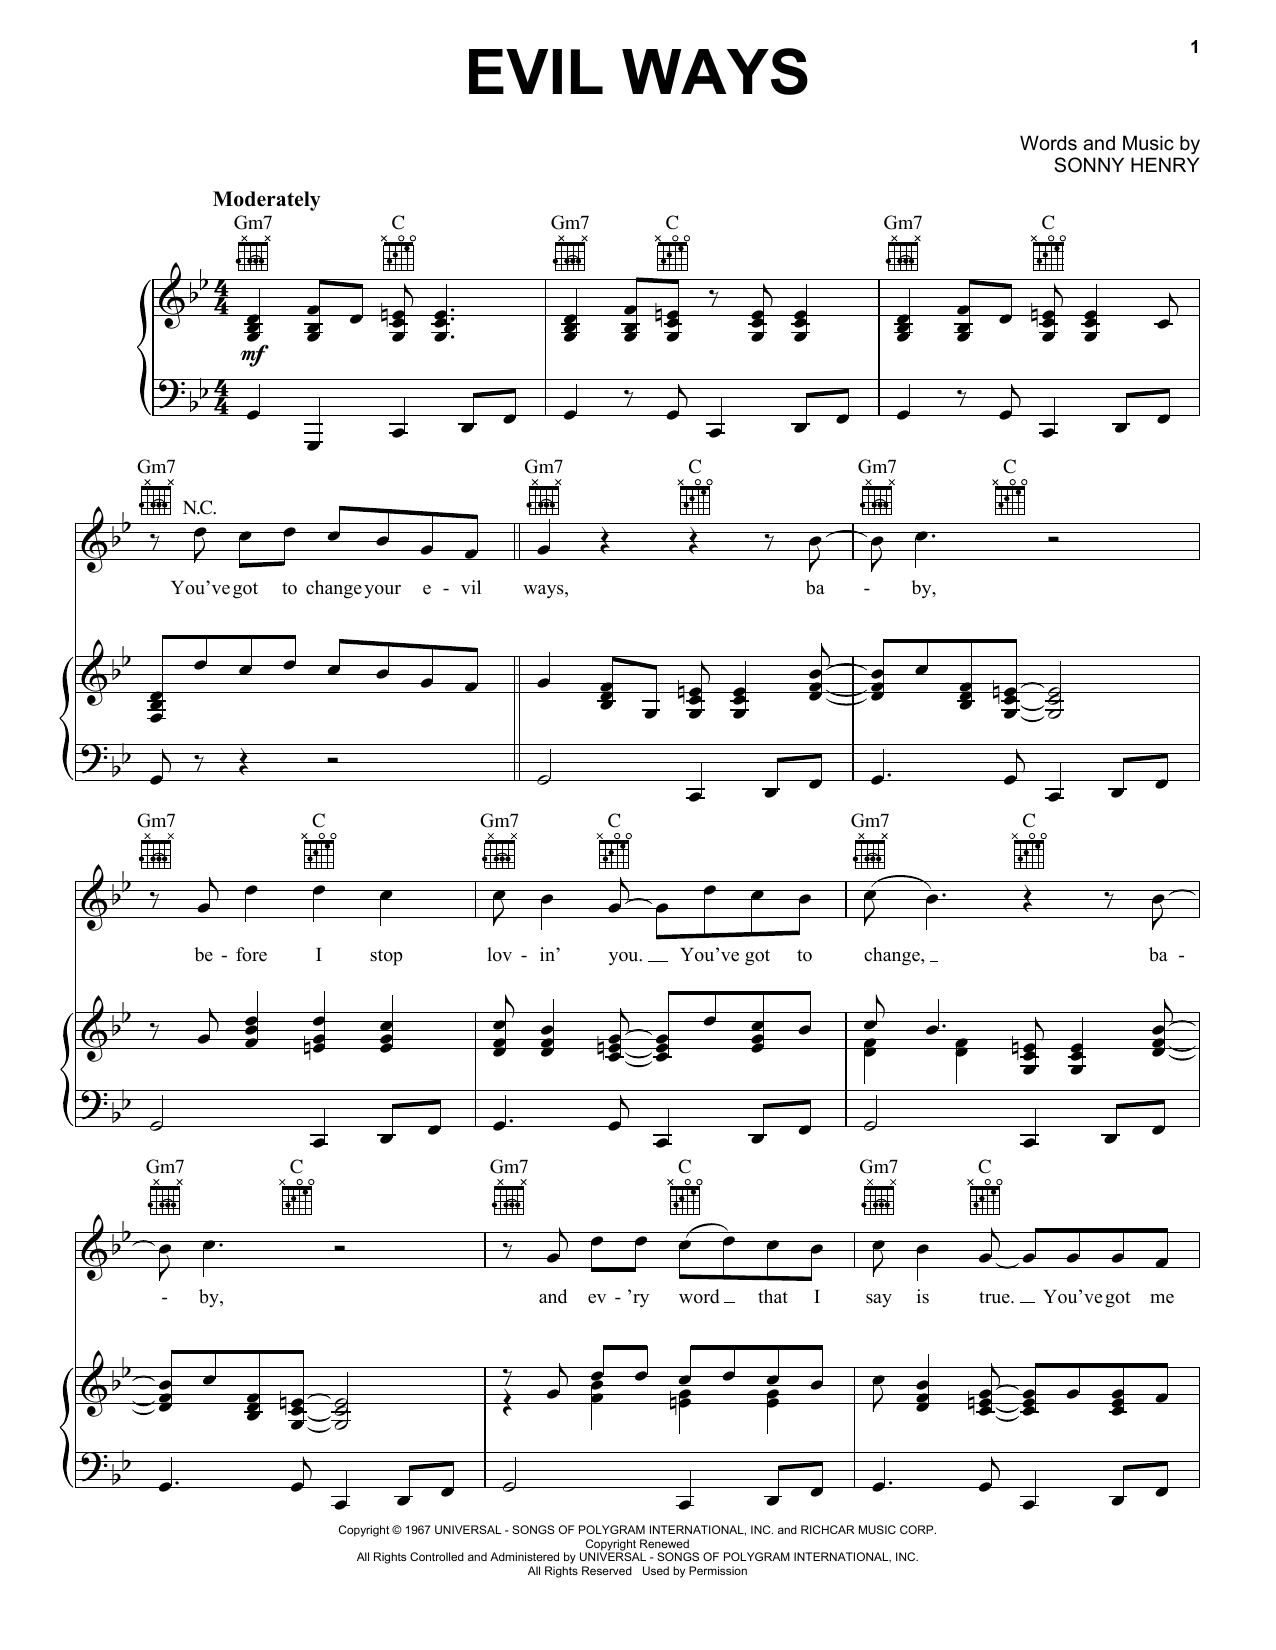 Santana Evil Ways Sheet Music Notes & Chords for Easy Guitar Tab - Download or Print PDF